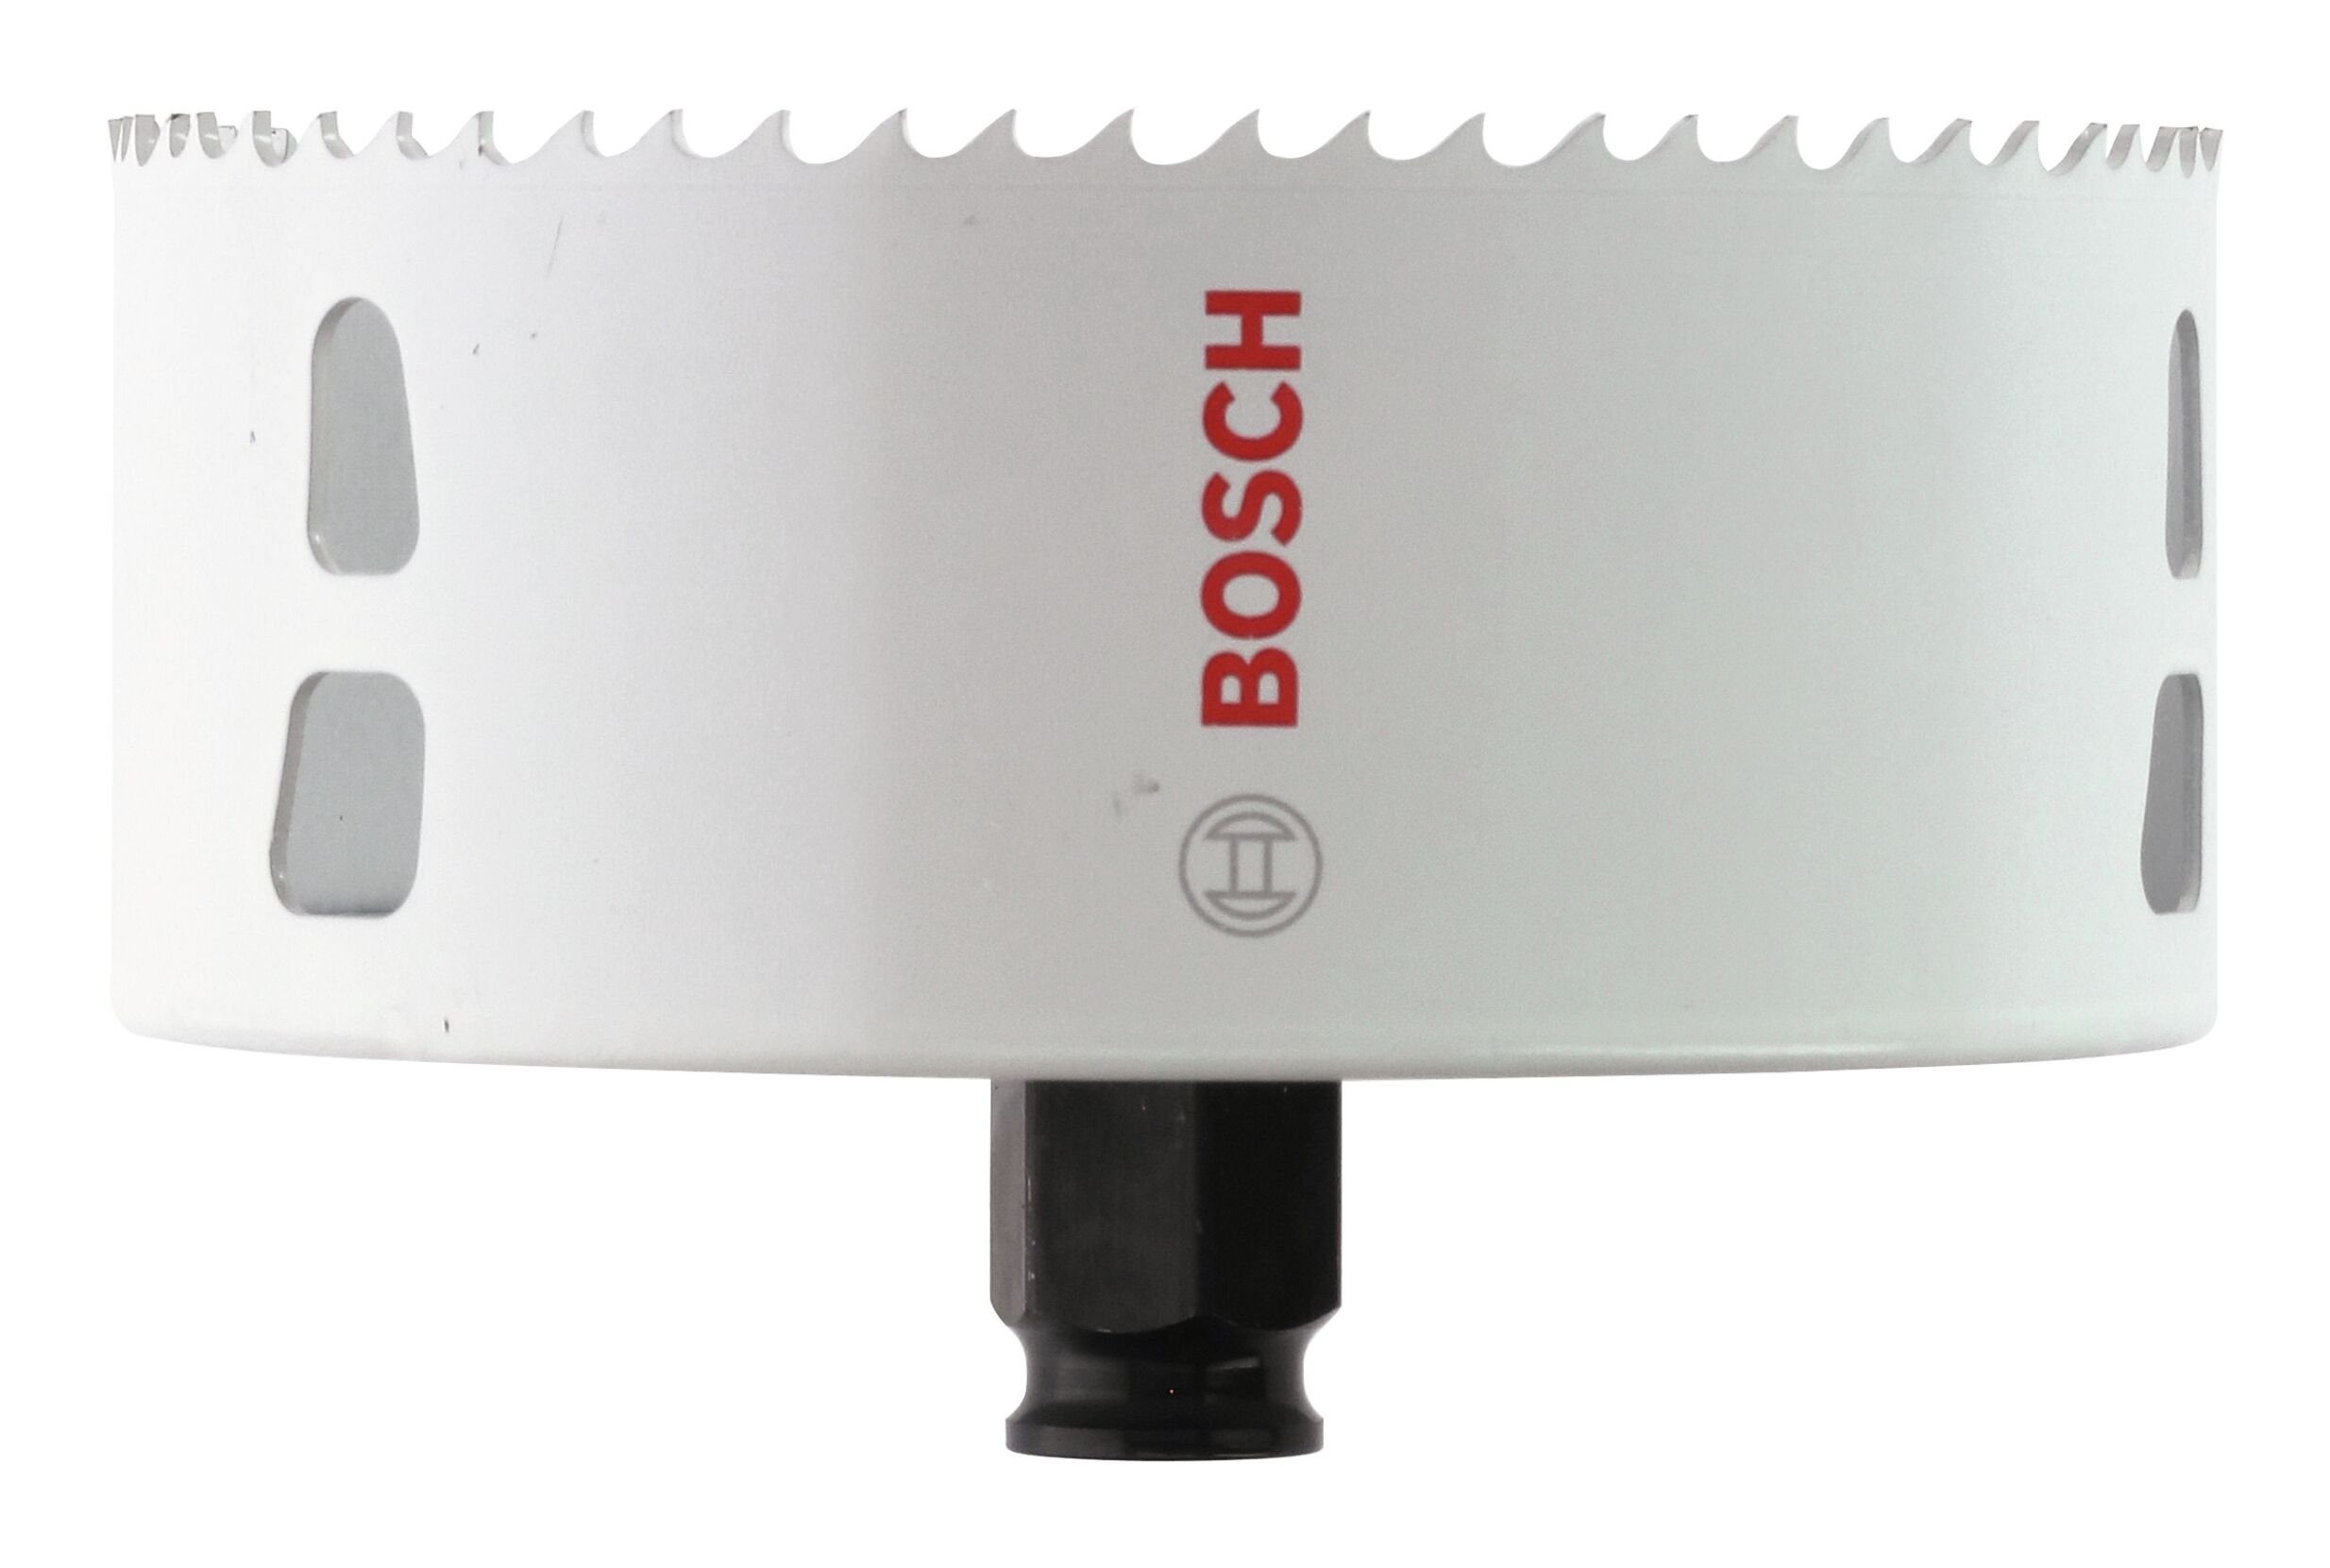 BOSCH Lochsäge, Ø 114 mm, Progressor for Wood and Metal